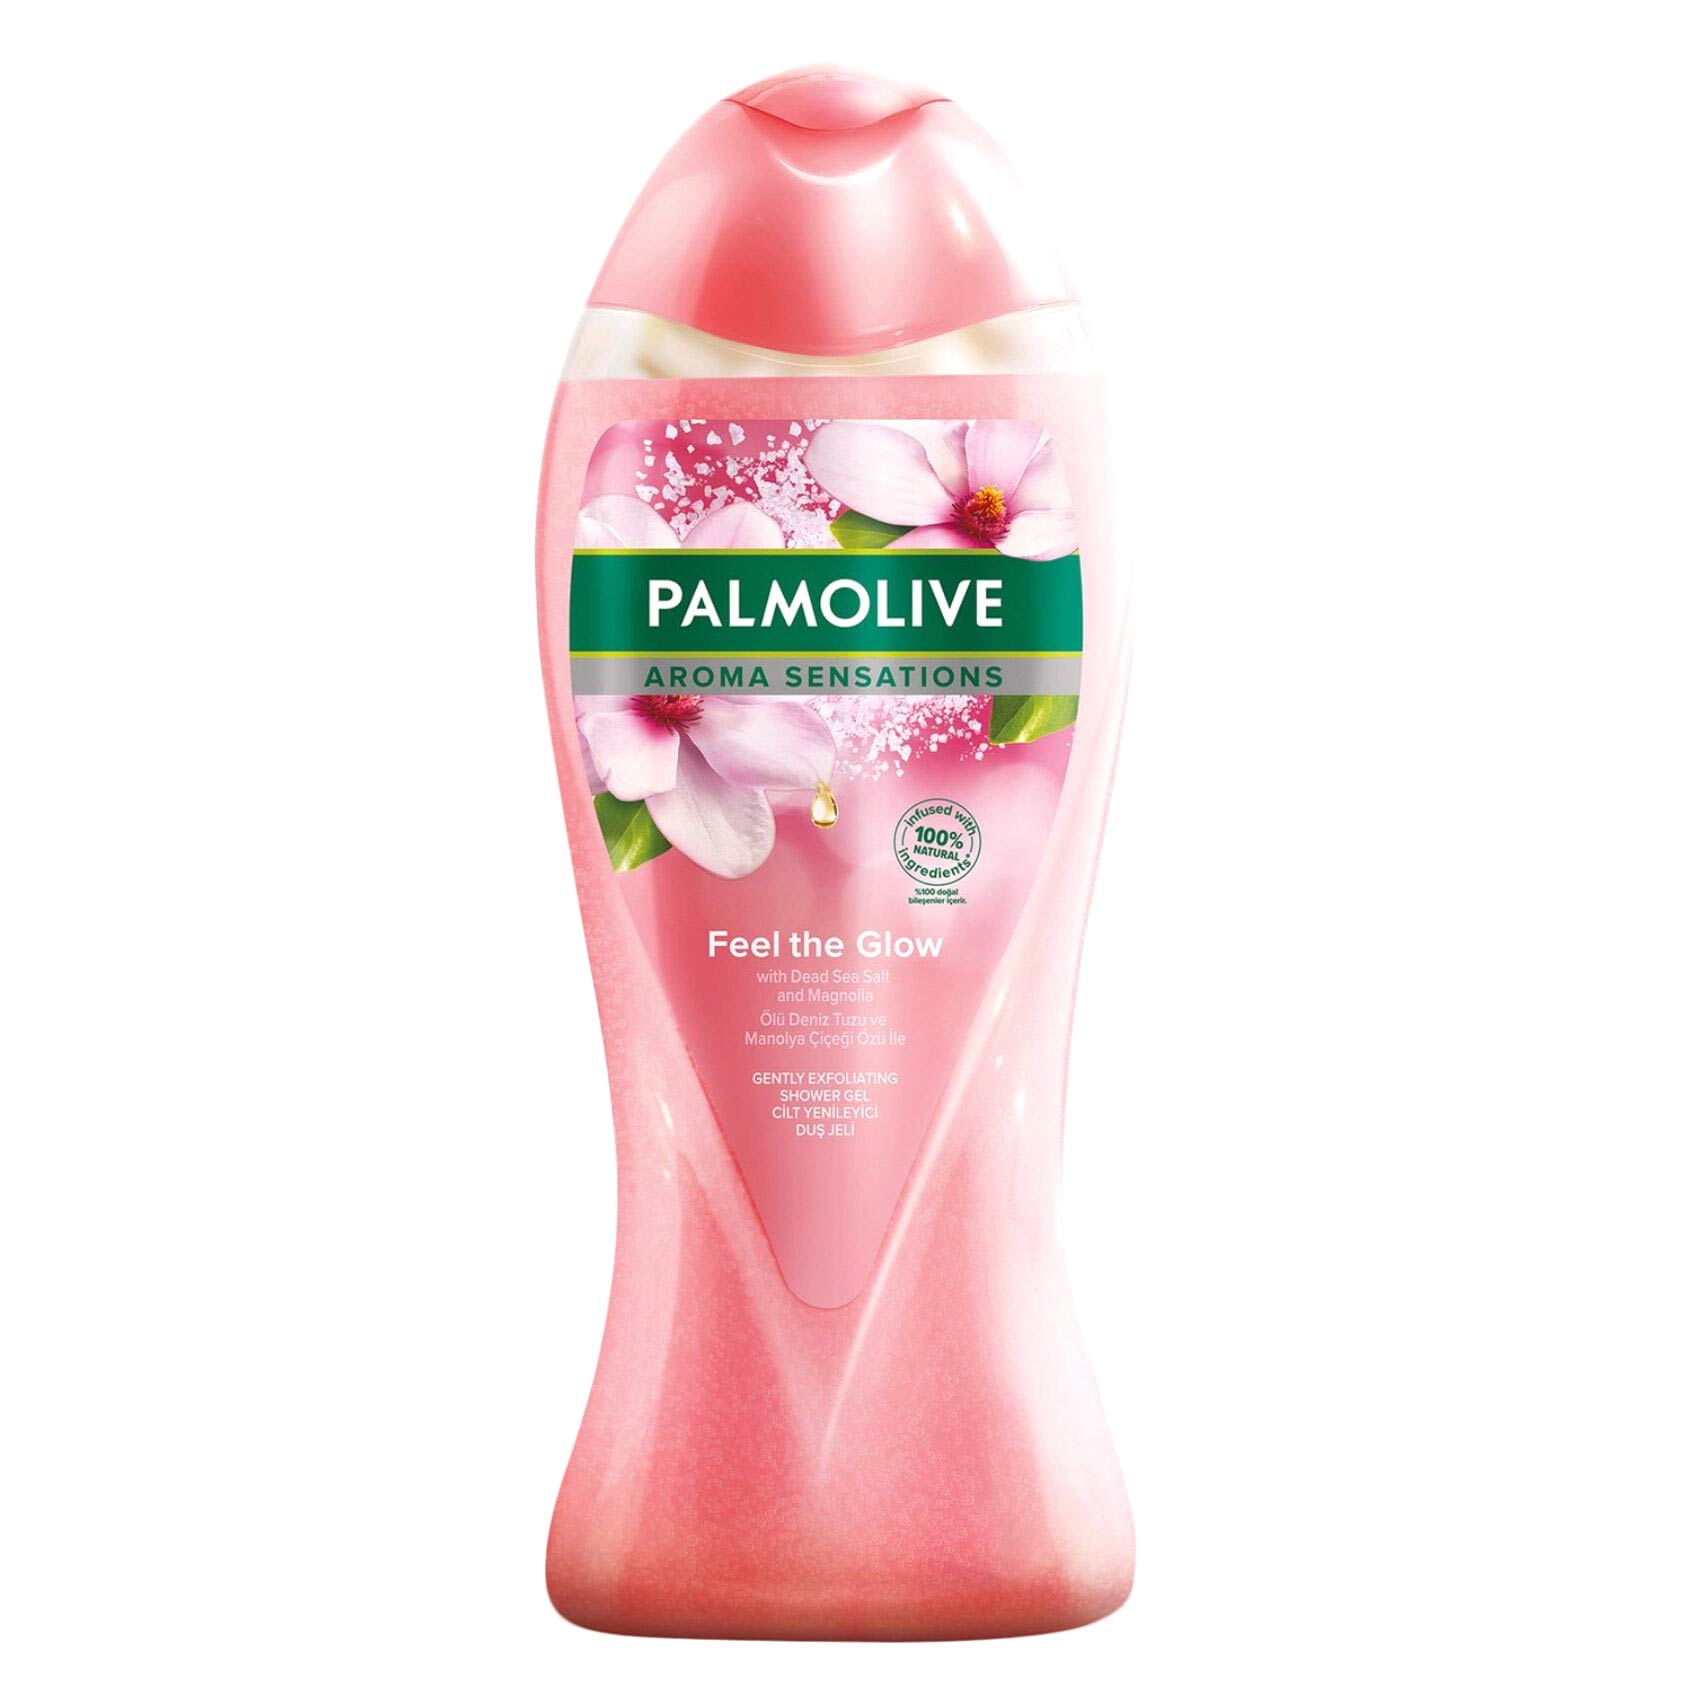 Palmolive Aroma Sensations Feel The Grow Shower Gel 500ml 30% Off